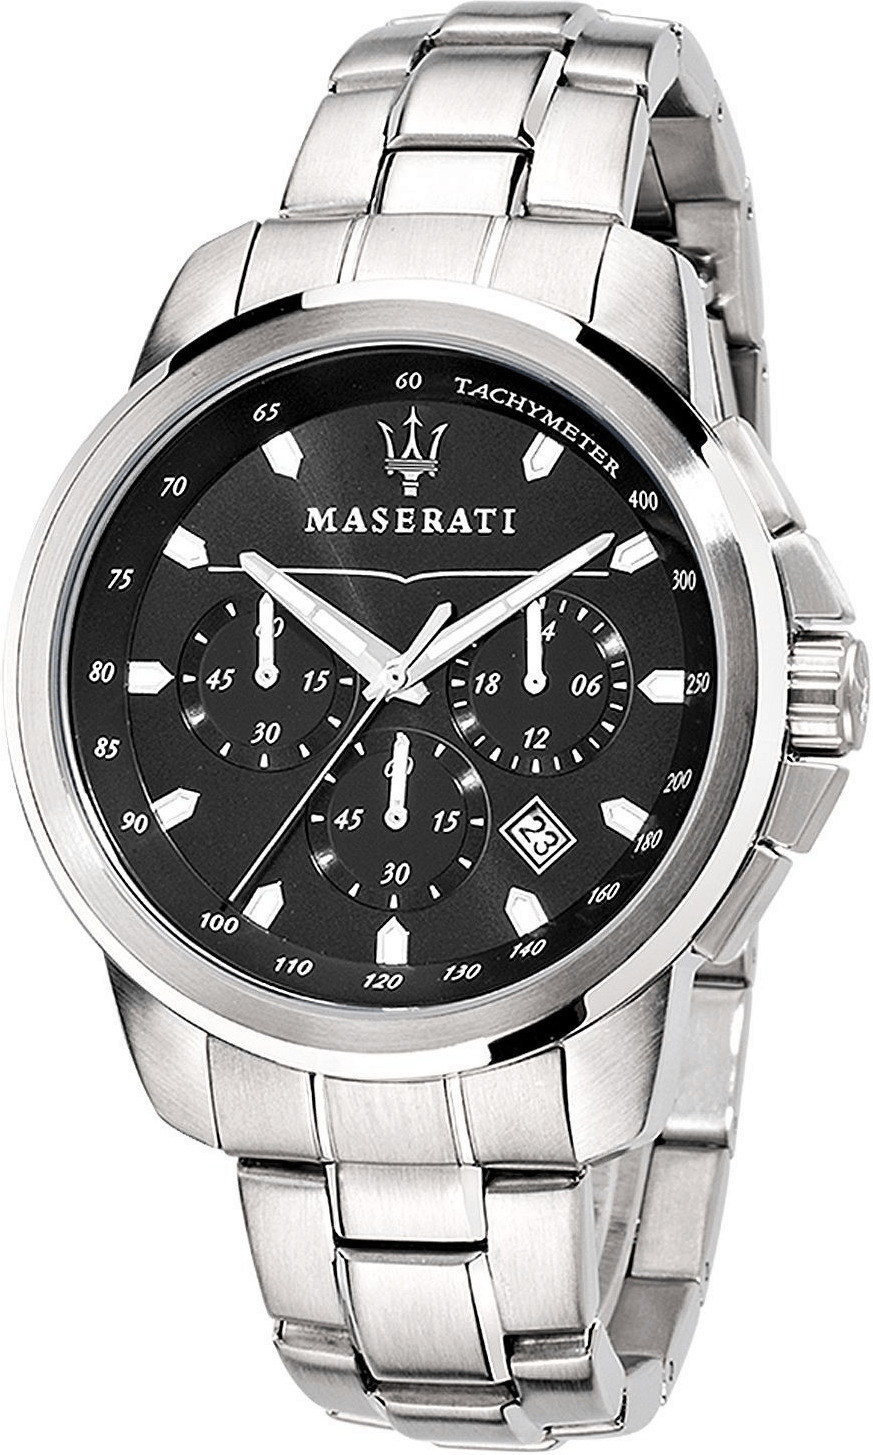 Photos - Wrist Watch Maserati Successo R8873621001 